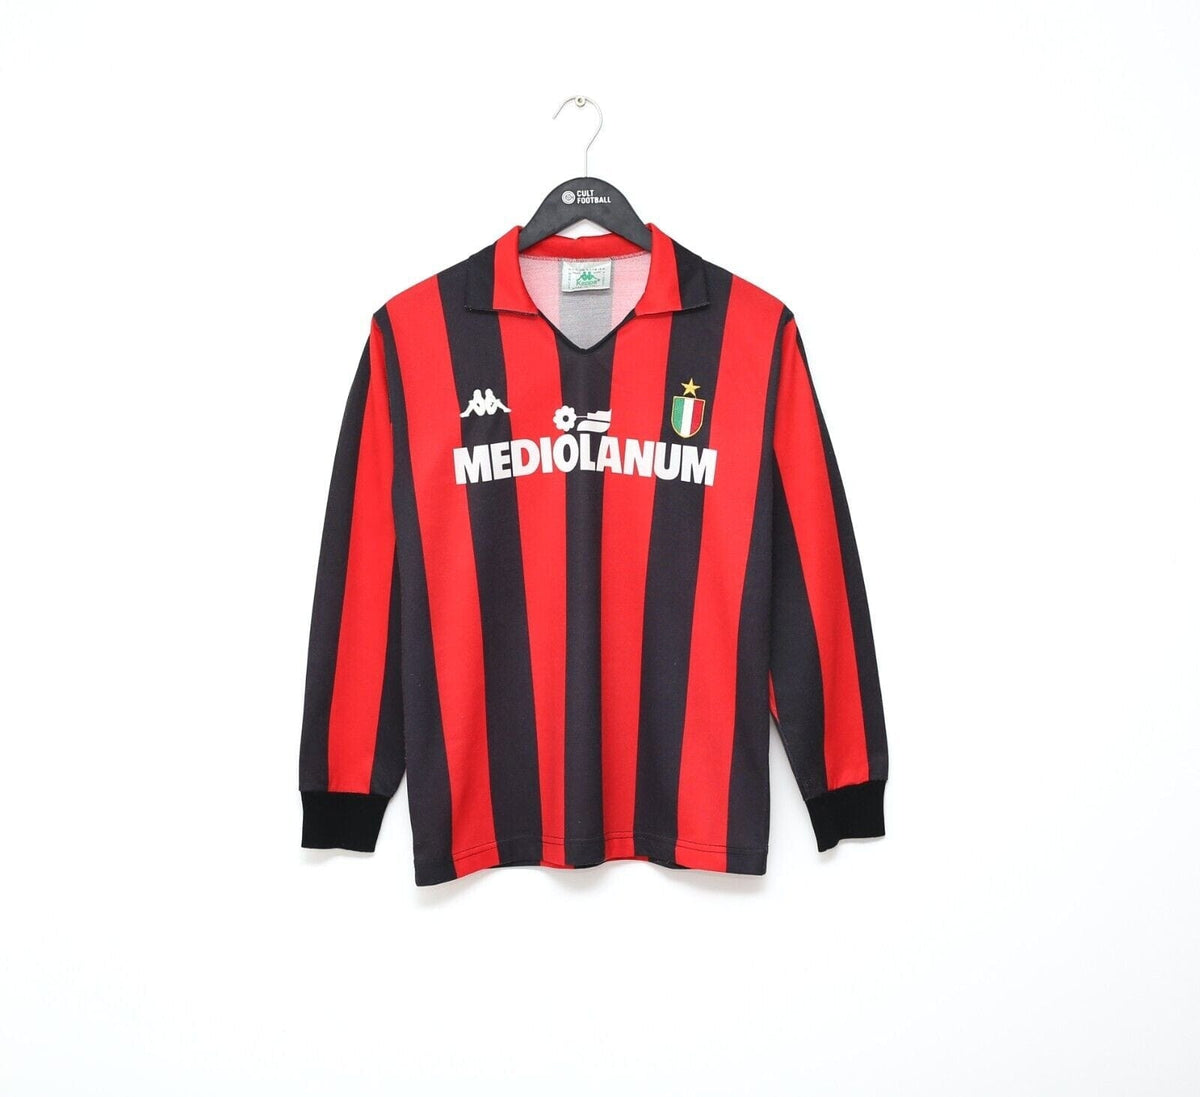 Kwaadaardige tumor Illusie Associëren Vintage AC Milan football shirts - Football Shirt Collective